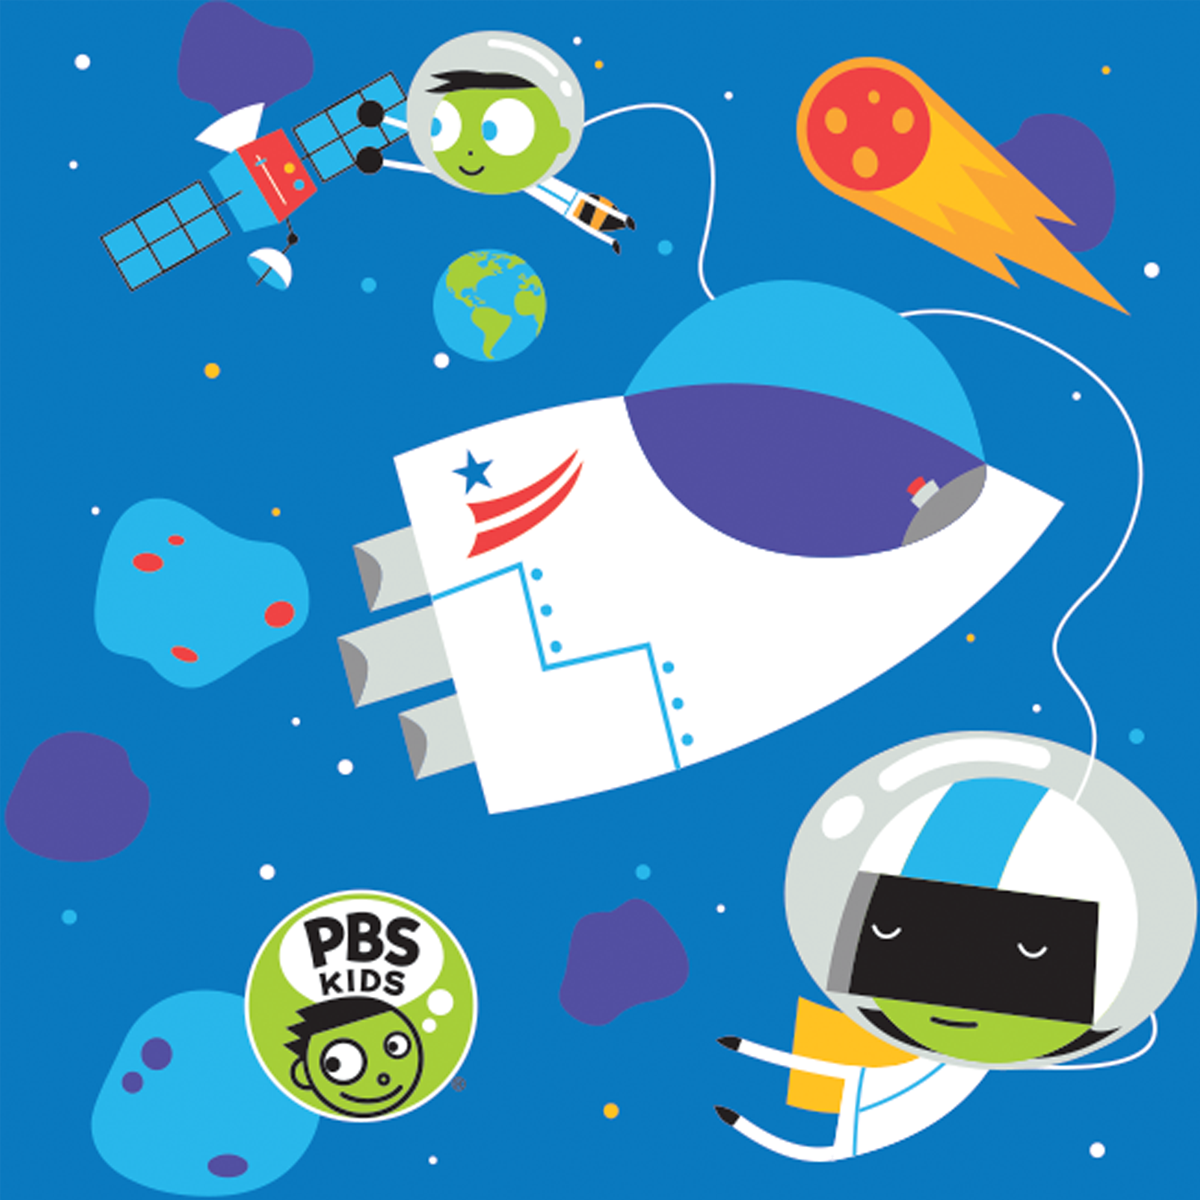 PBS KIDS "SPACE EXPLORER" KINDERMAT SHEETS